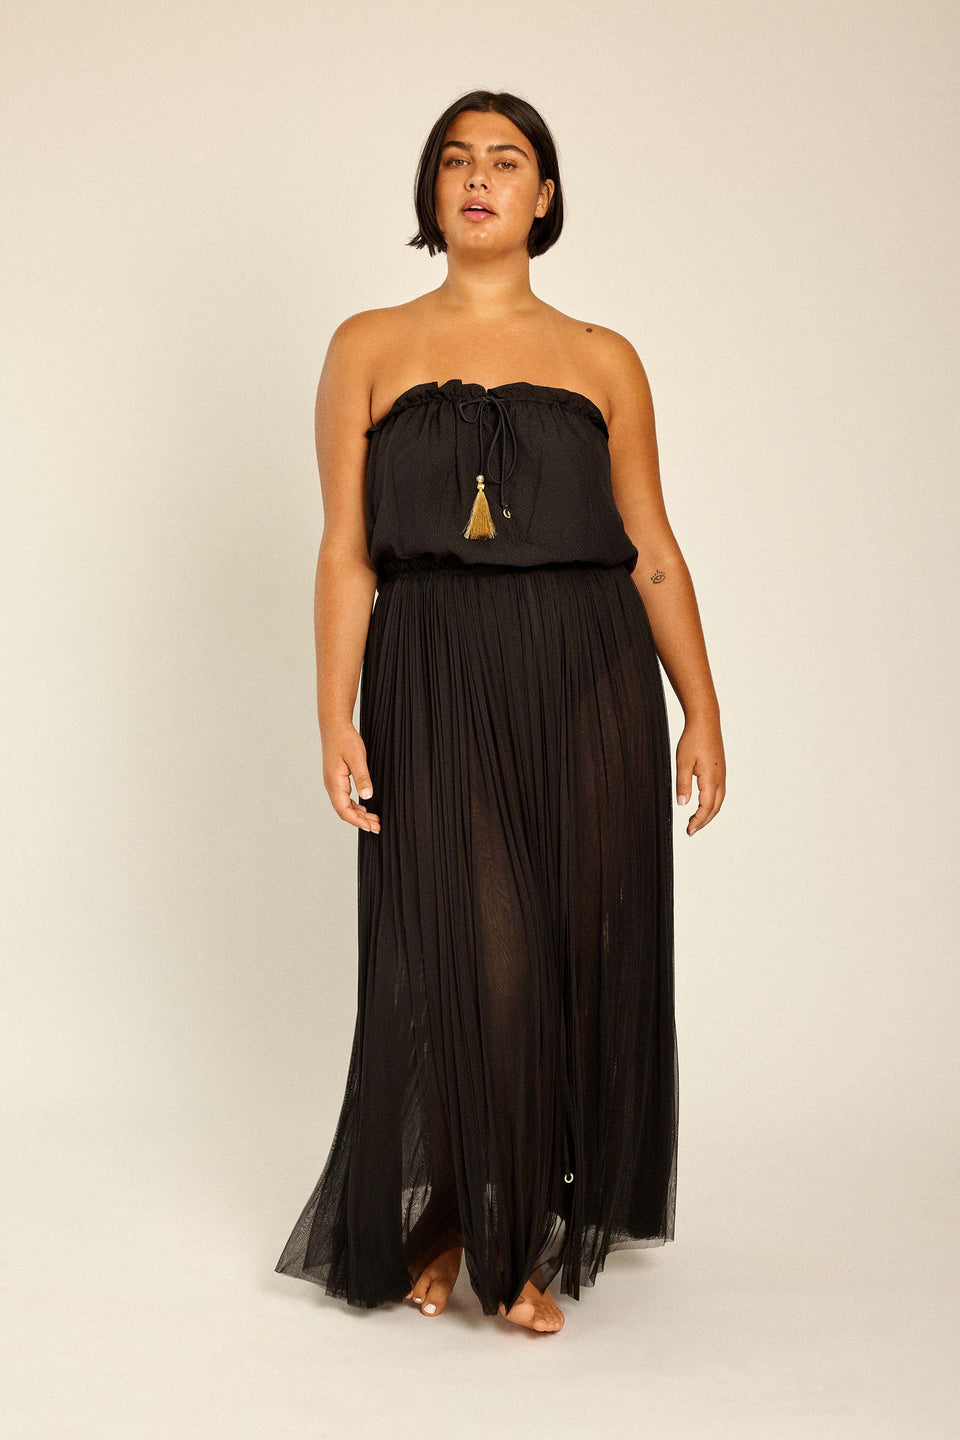 Silk Dress worn by plus size XL beautiful curvy model. Perfect for resort, party & wedding.